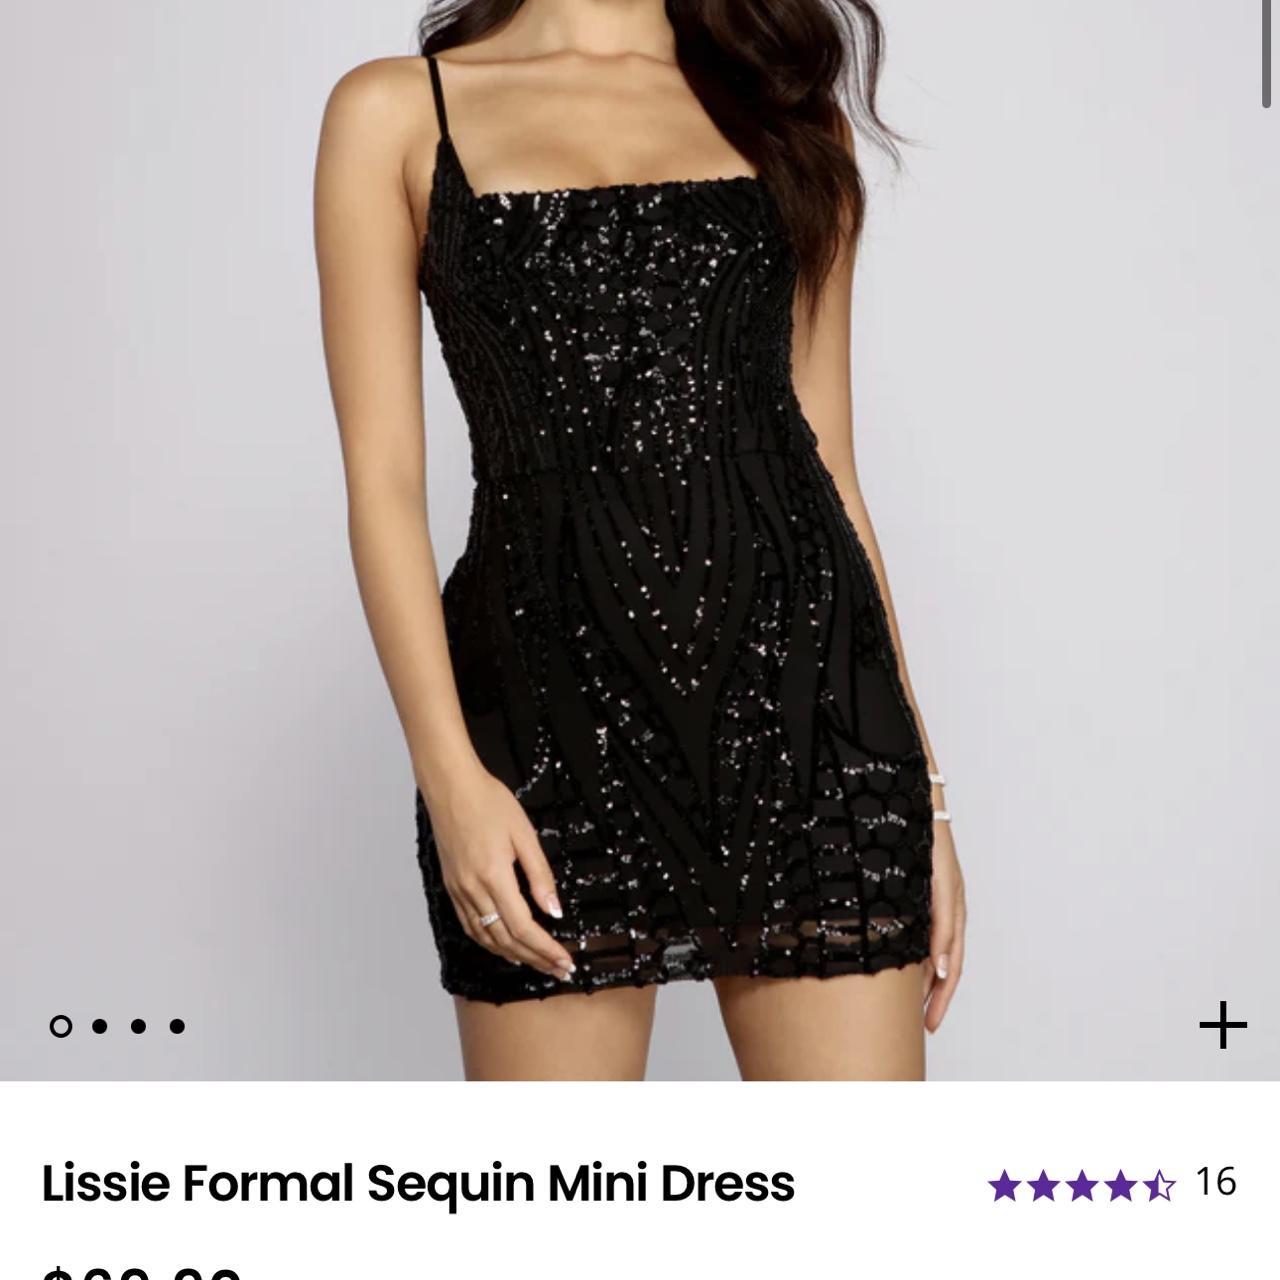 Lissie Formal Sequin Mini Dress